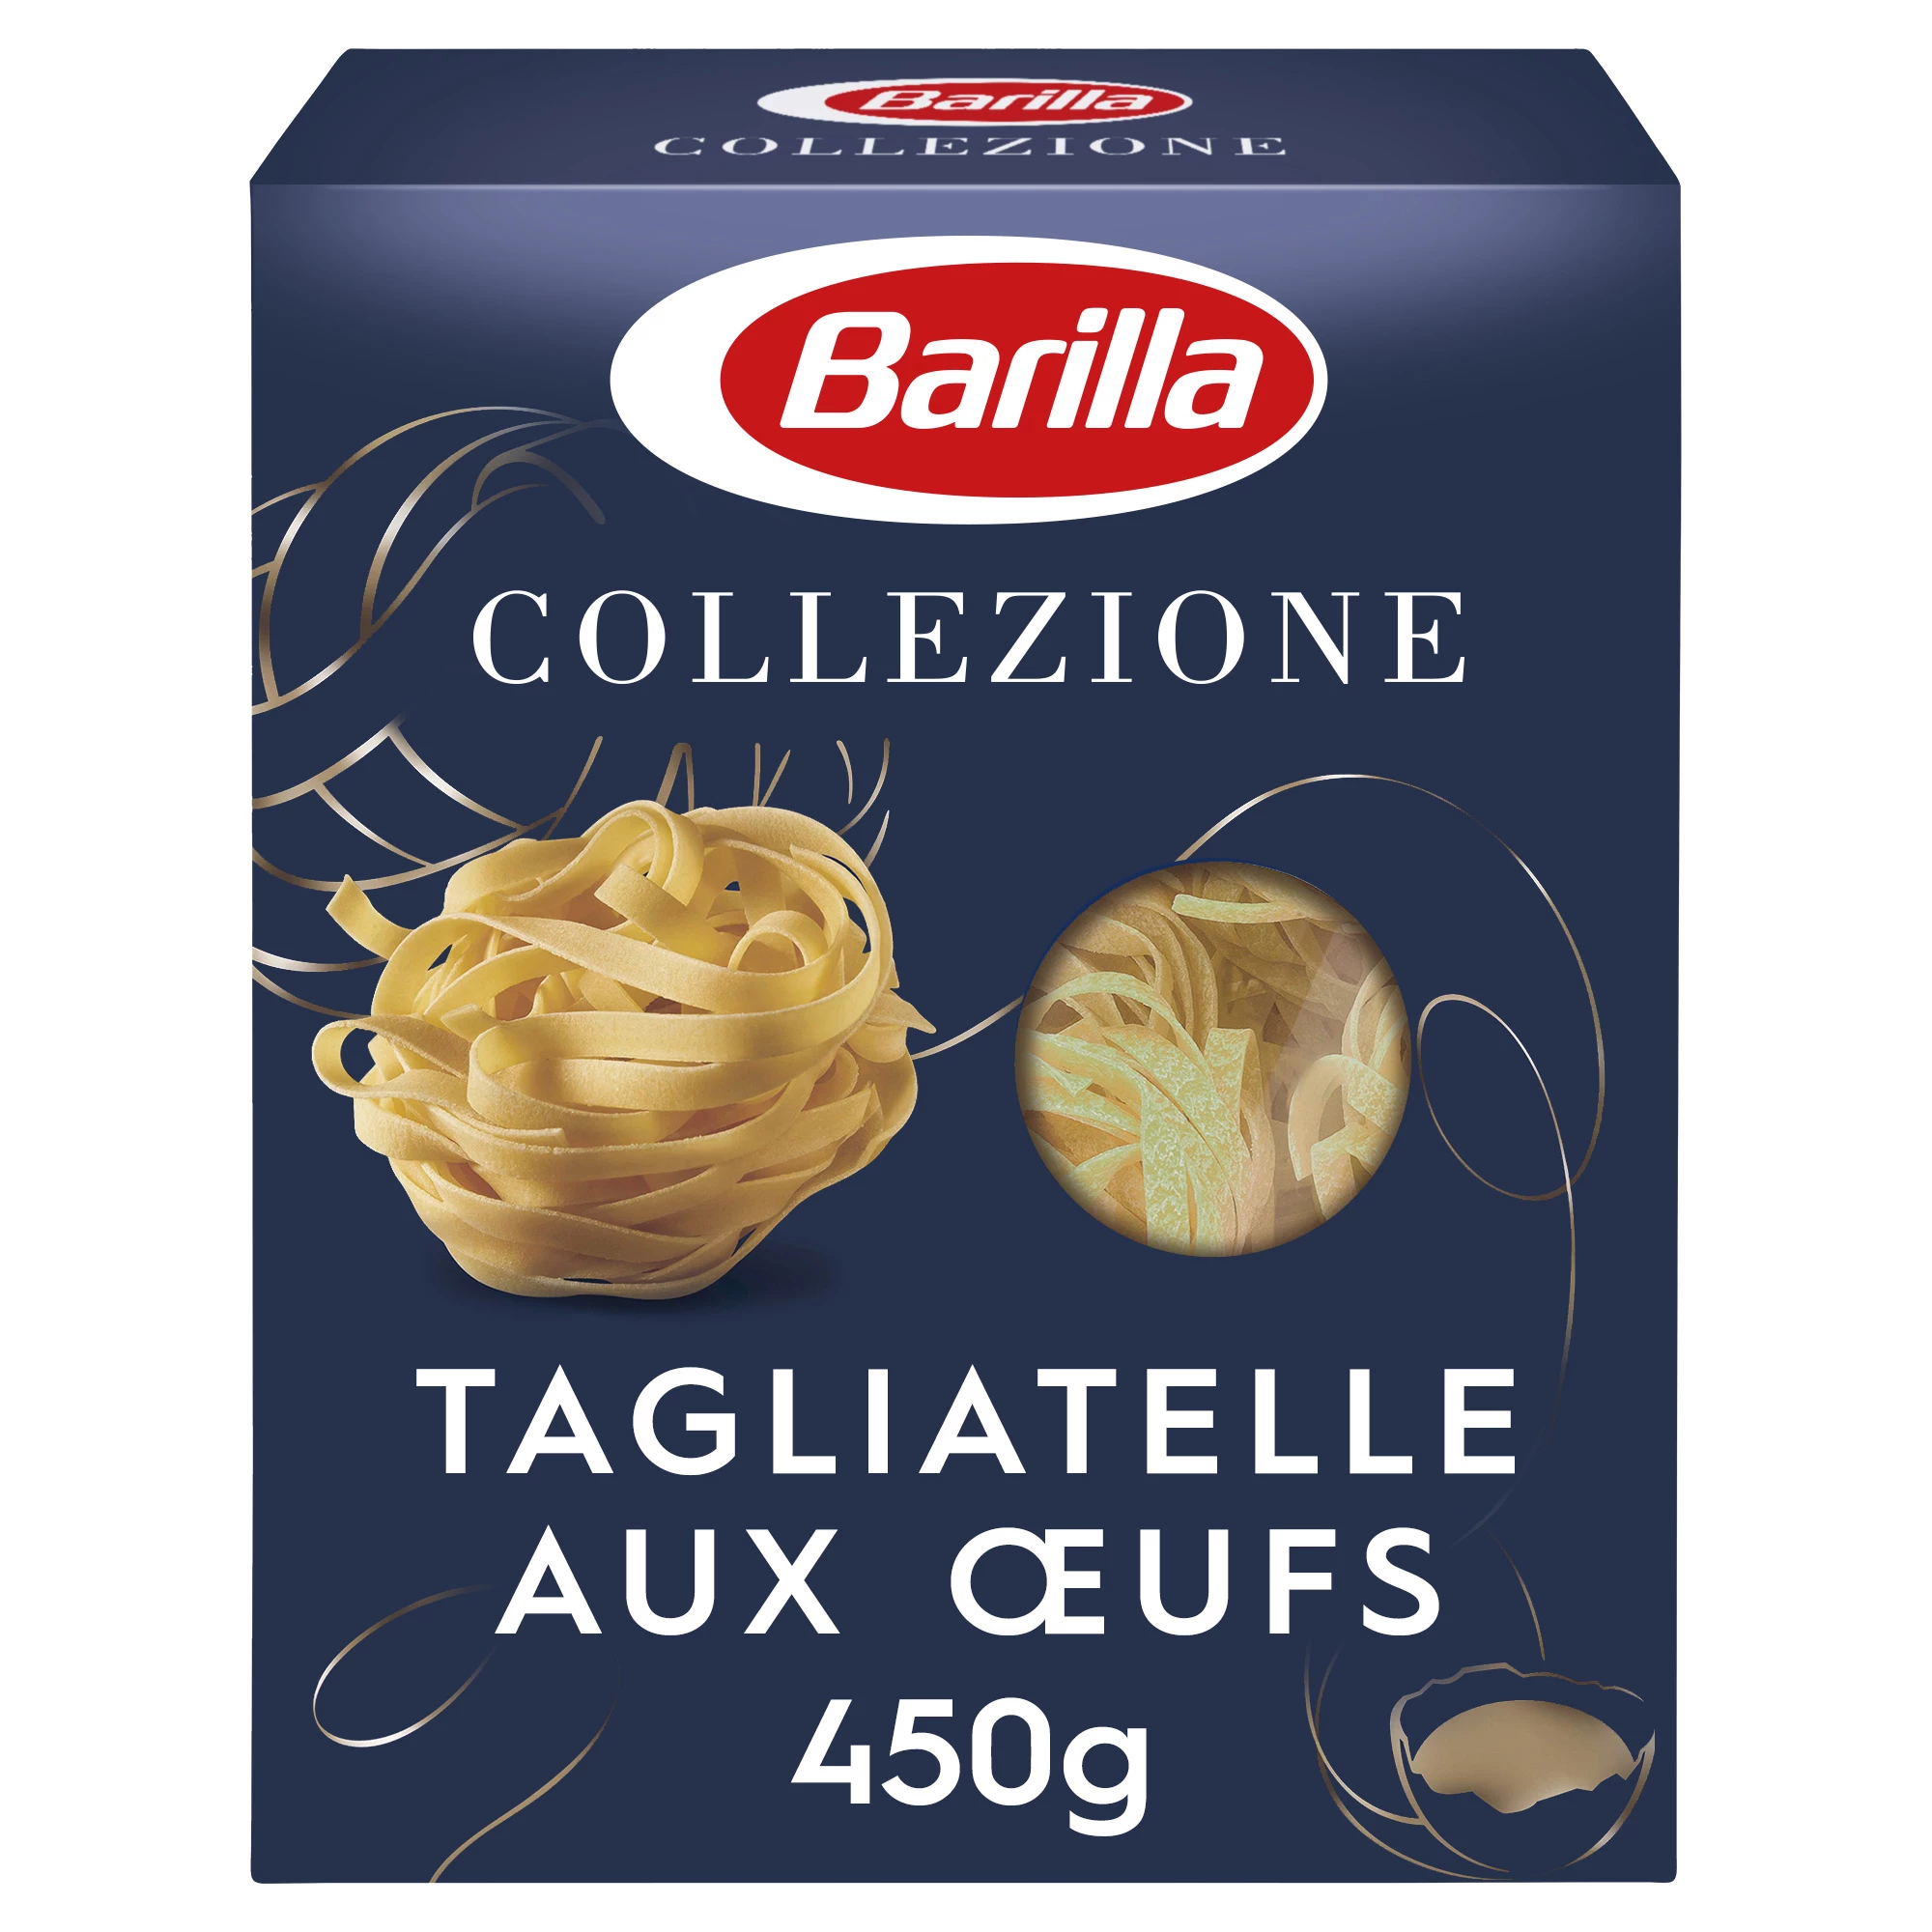 Patés Colección Tagliatelle les, 500g - BARILLA